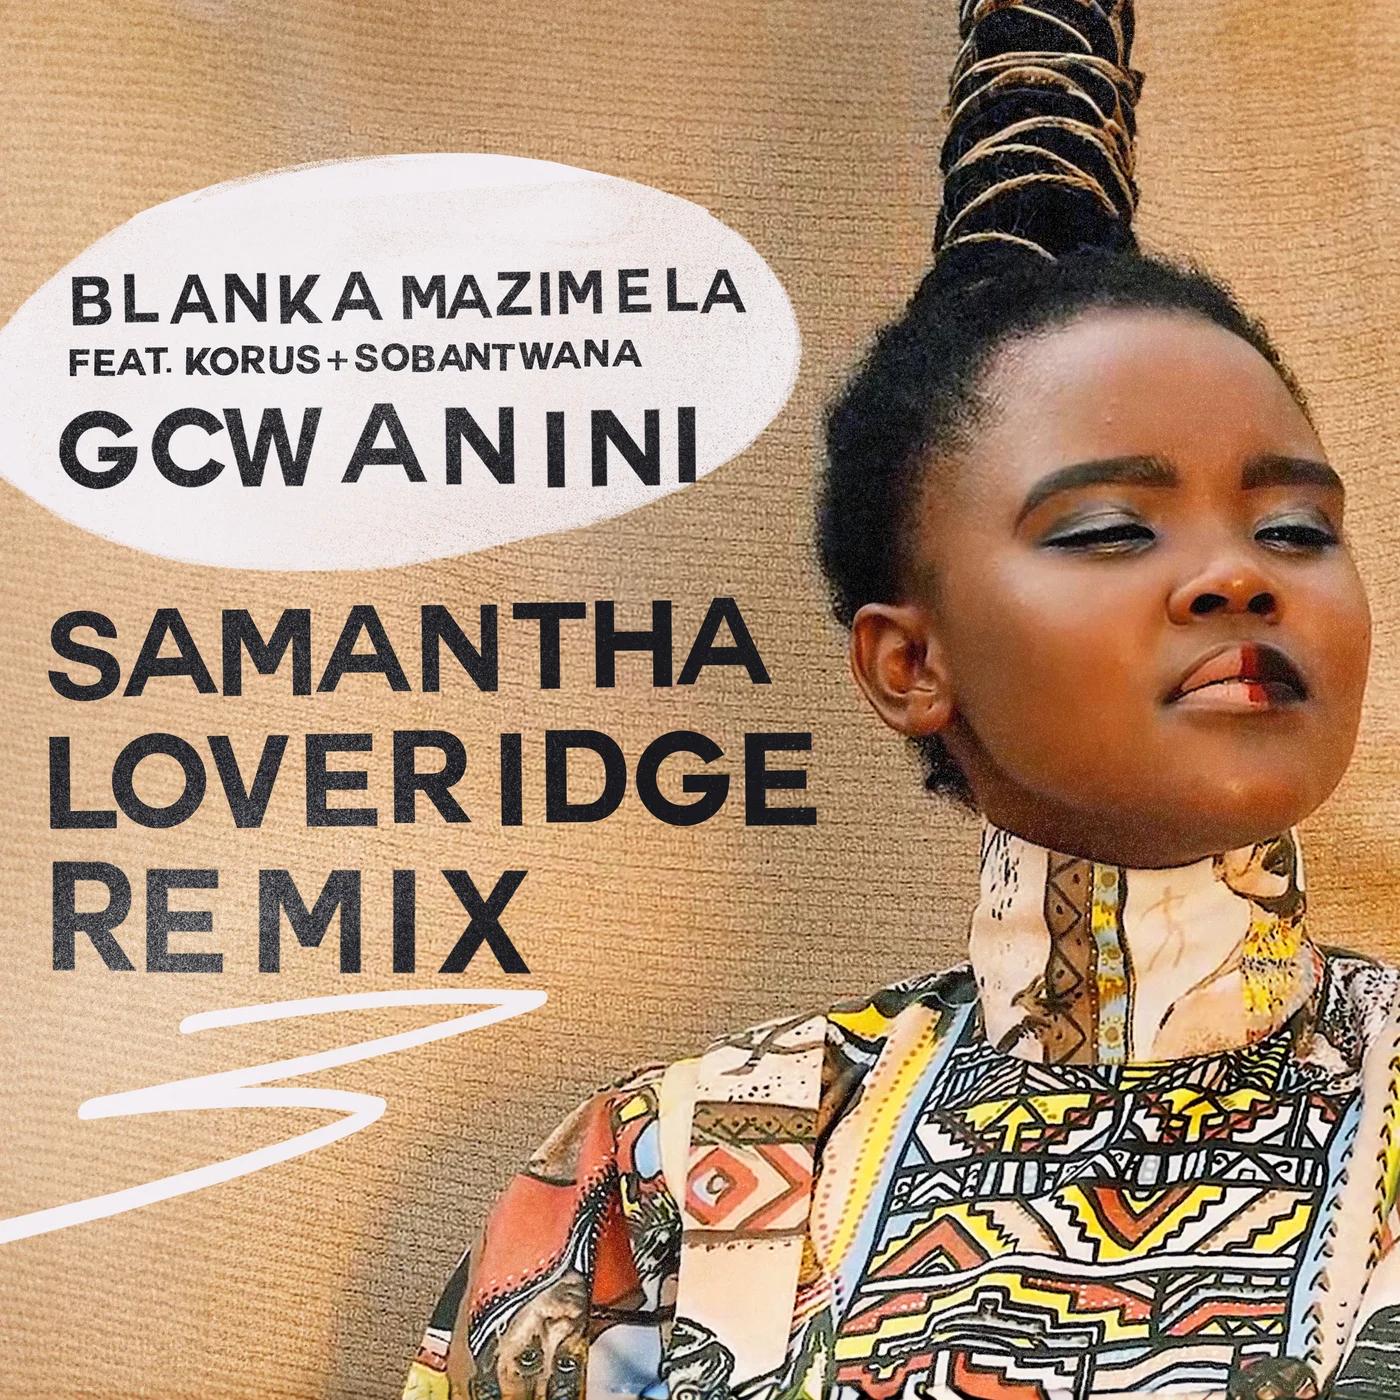 Blanka Mazimela, Korus, Sobantwana - Gcwanini (Samantha Loveridge Remix) on Get Physical Music